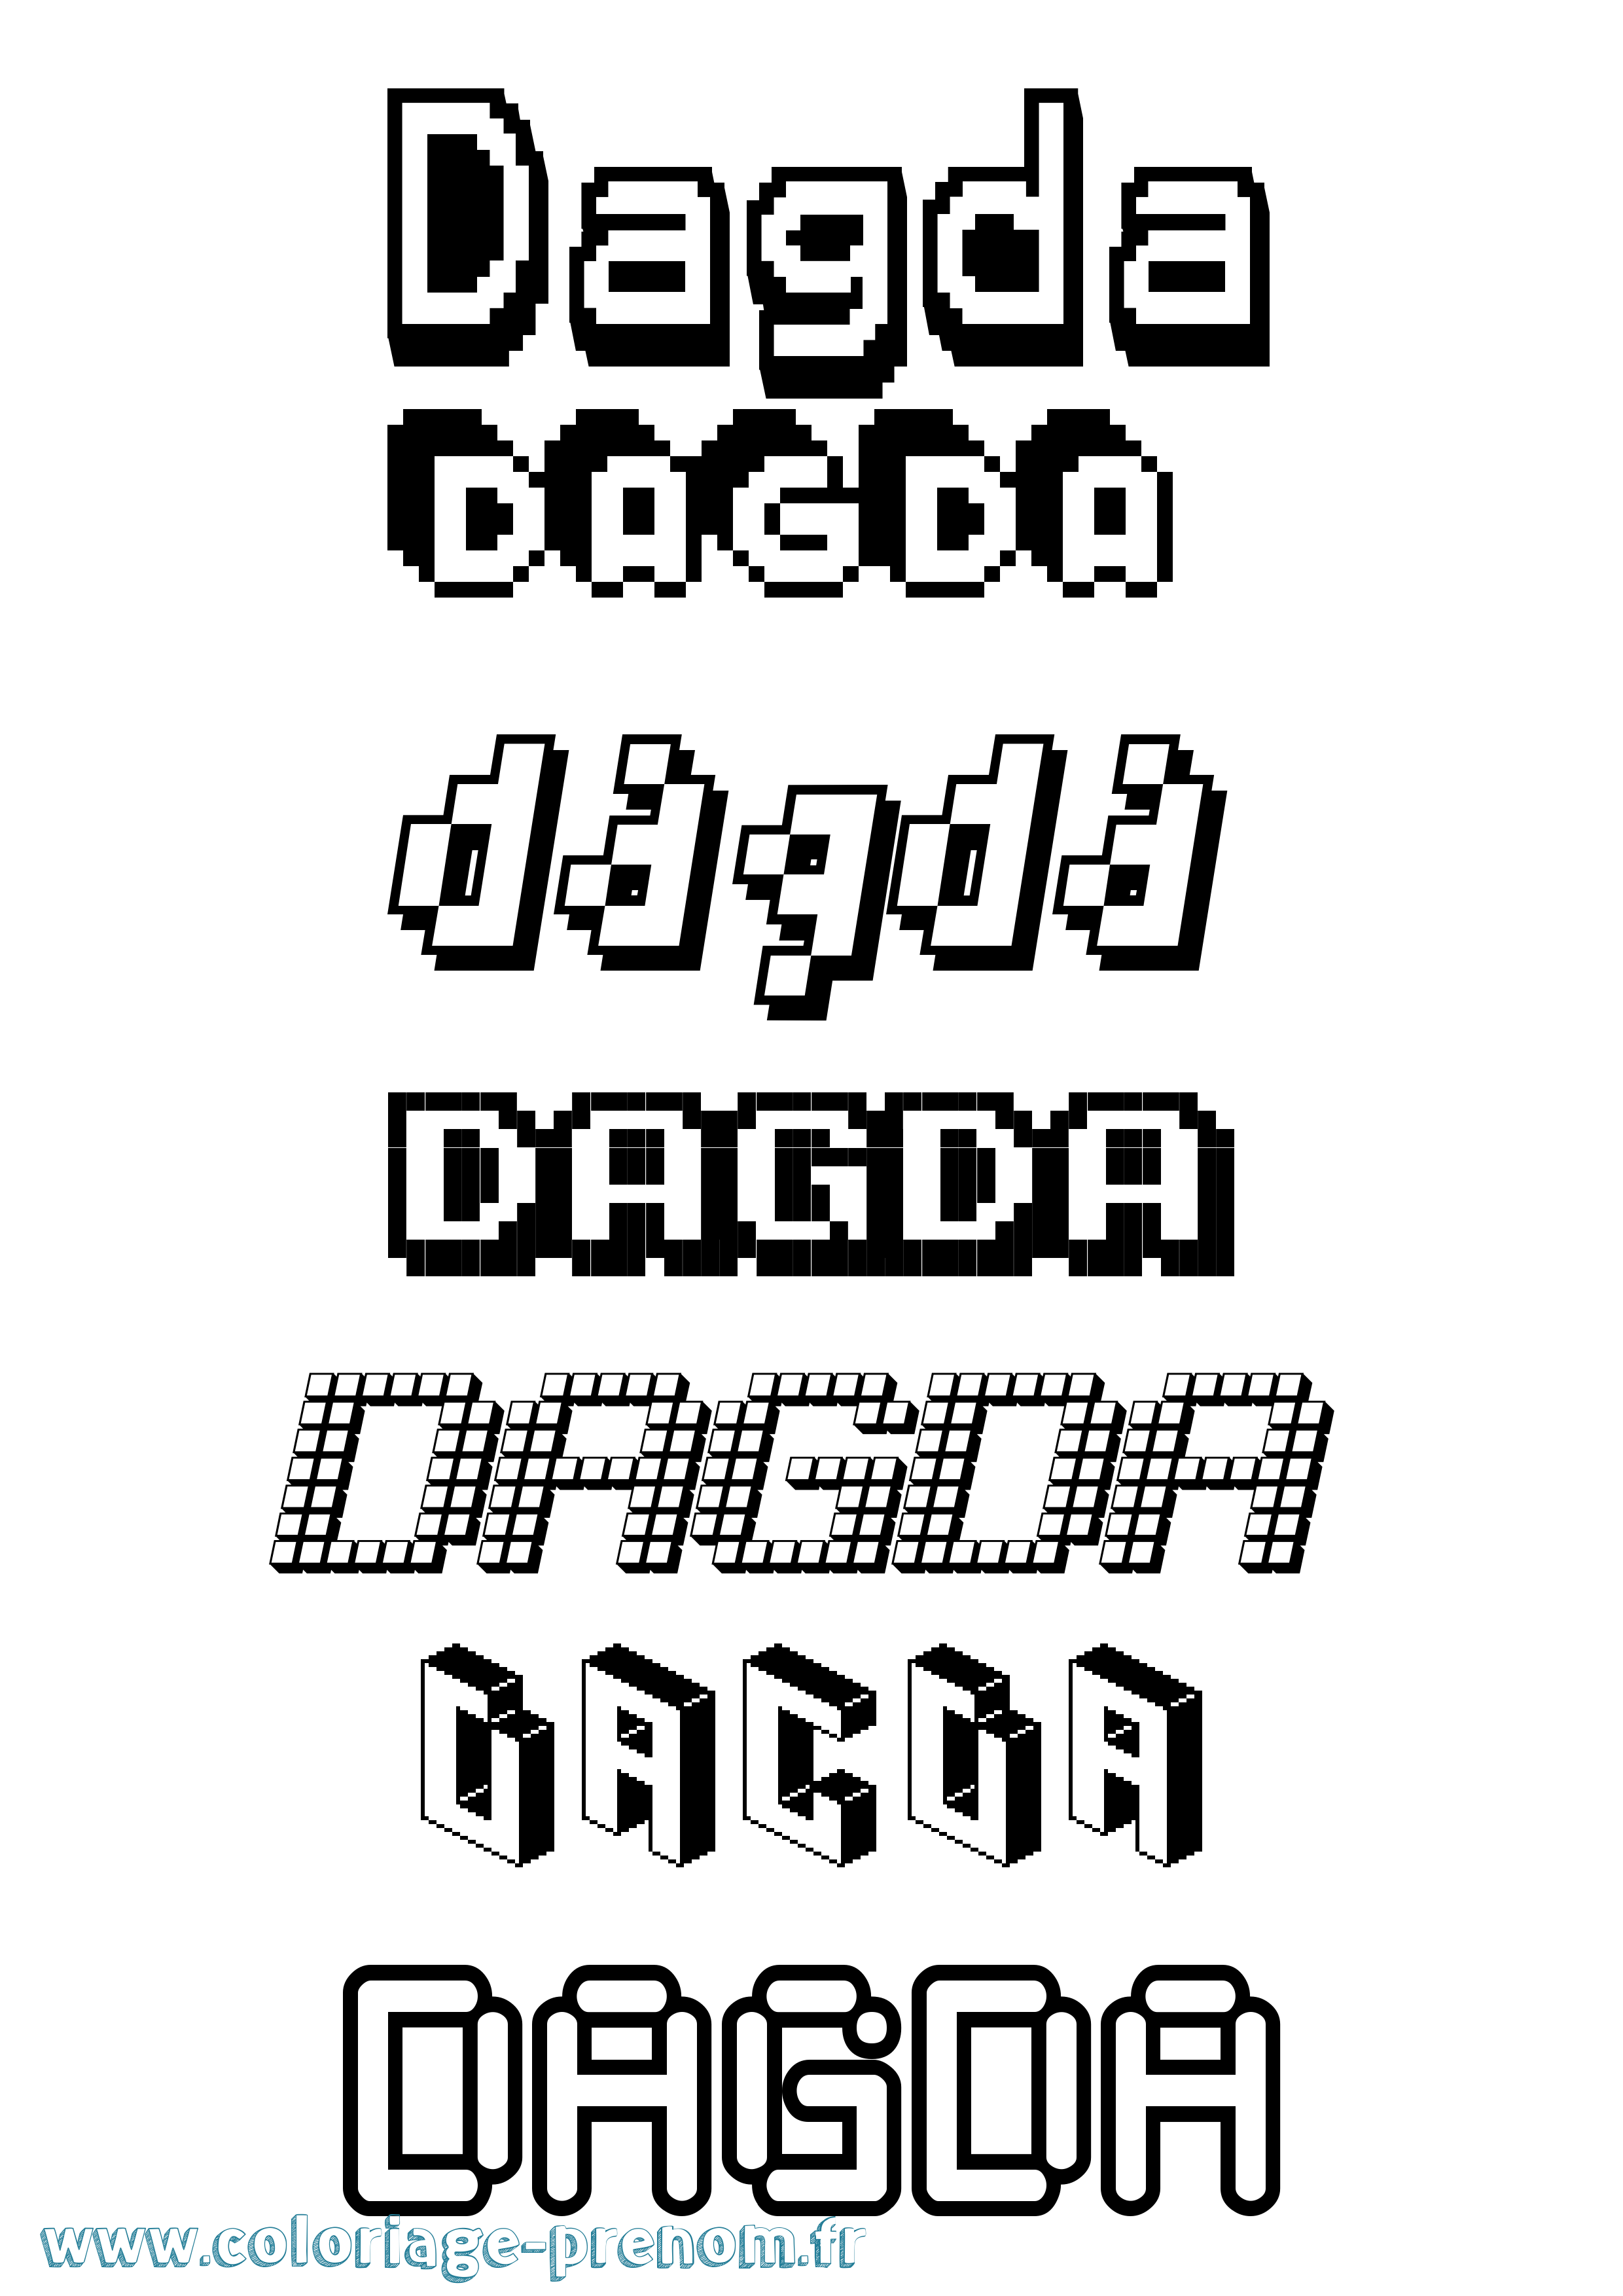 Coloriage prénom Dagda Pixel